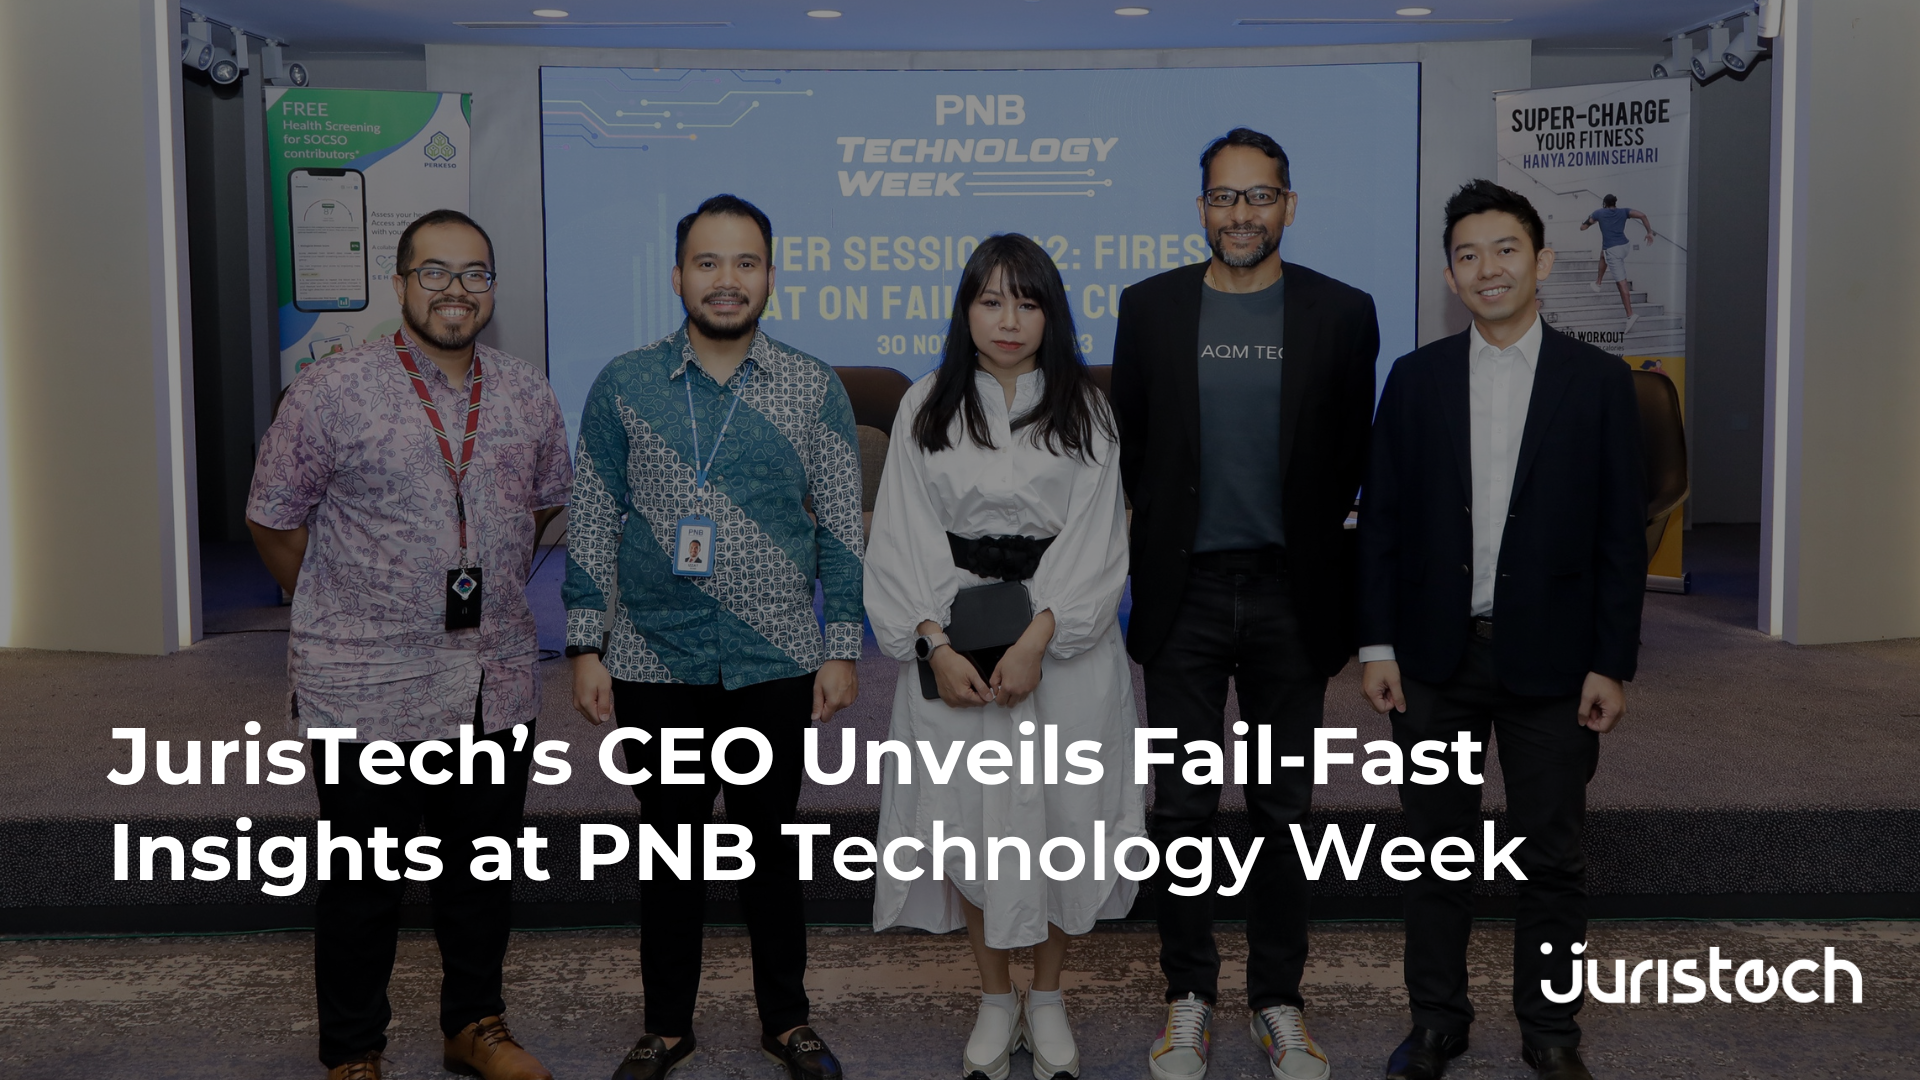 JurisTech, PNB, See Wai Hun, Group photo, fail-fast philosophy, Patrick Hew, Ravinder Singh, Reza Baharin, Paywatch, AQM Technologies